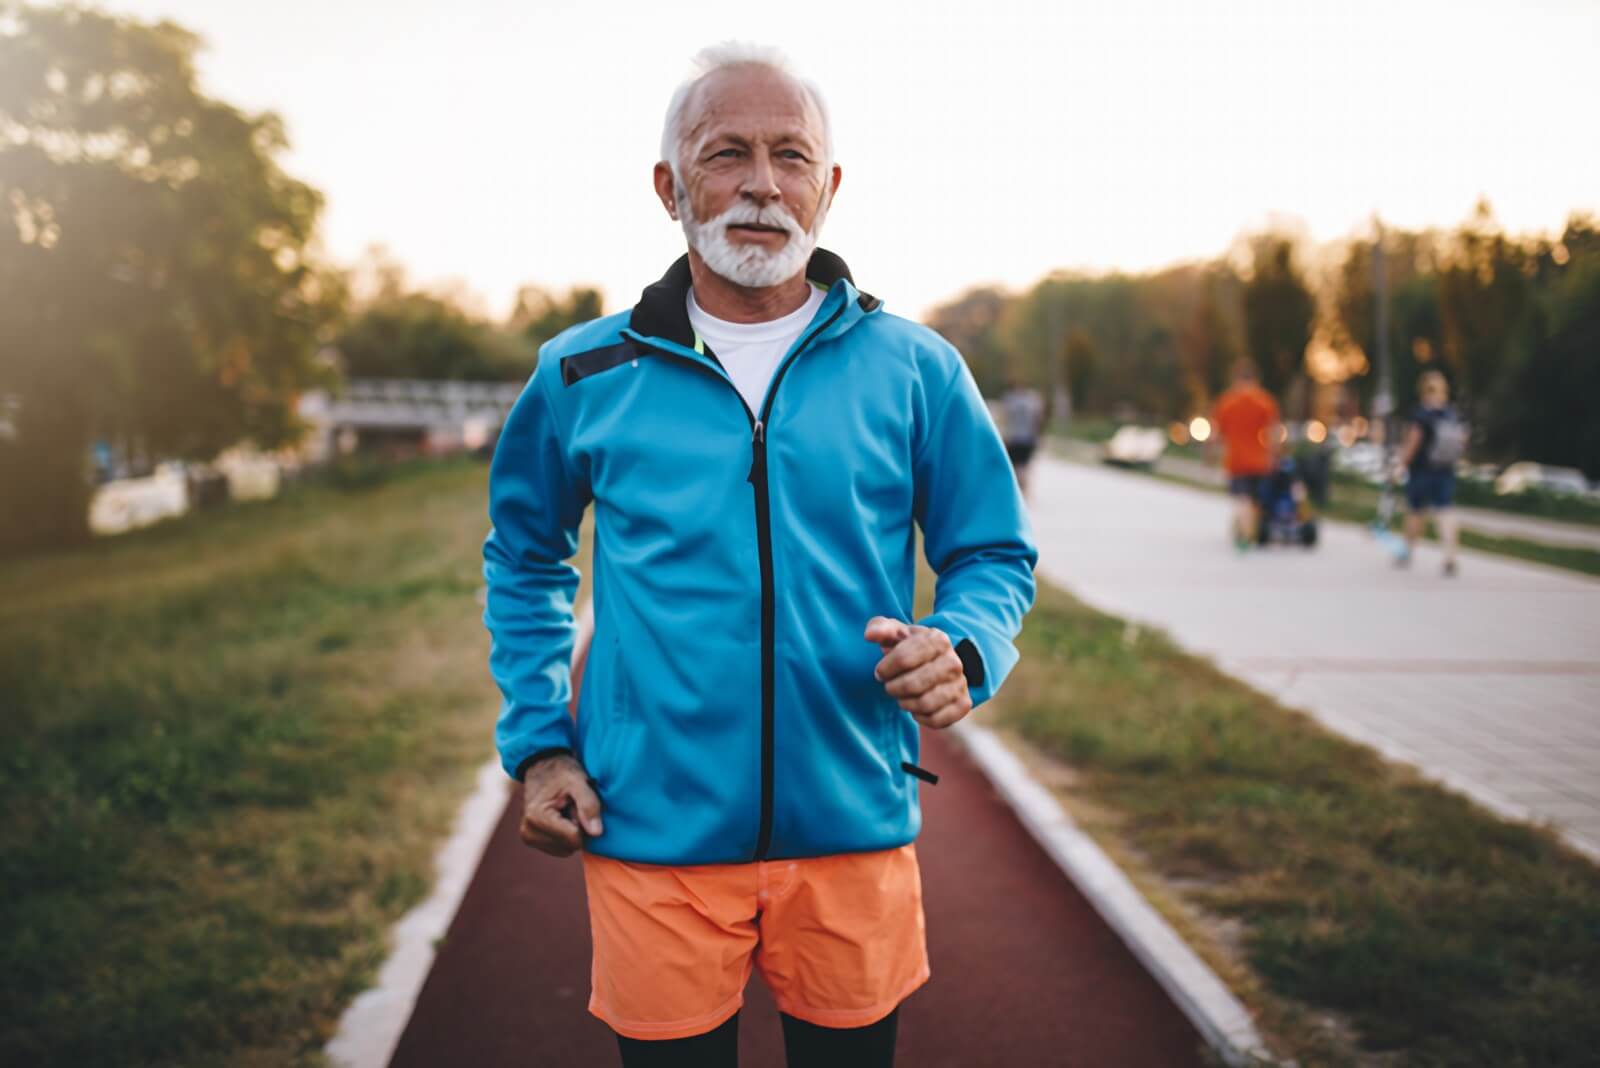 A senior man jogging